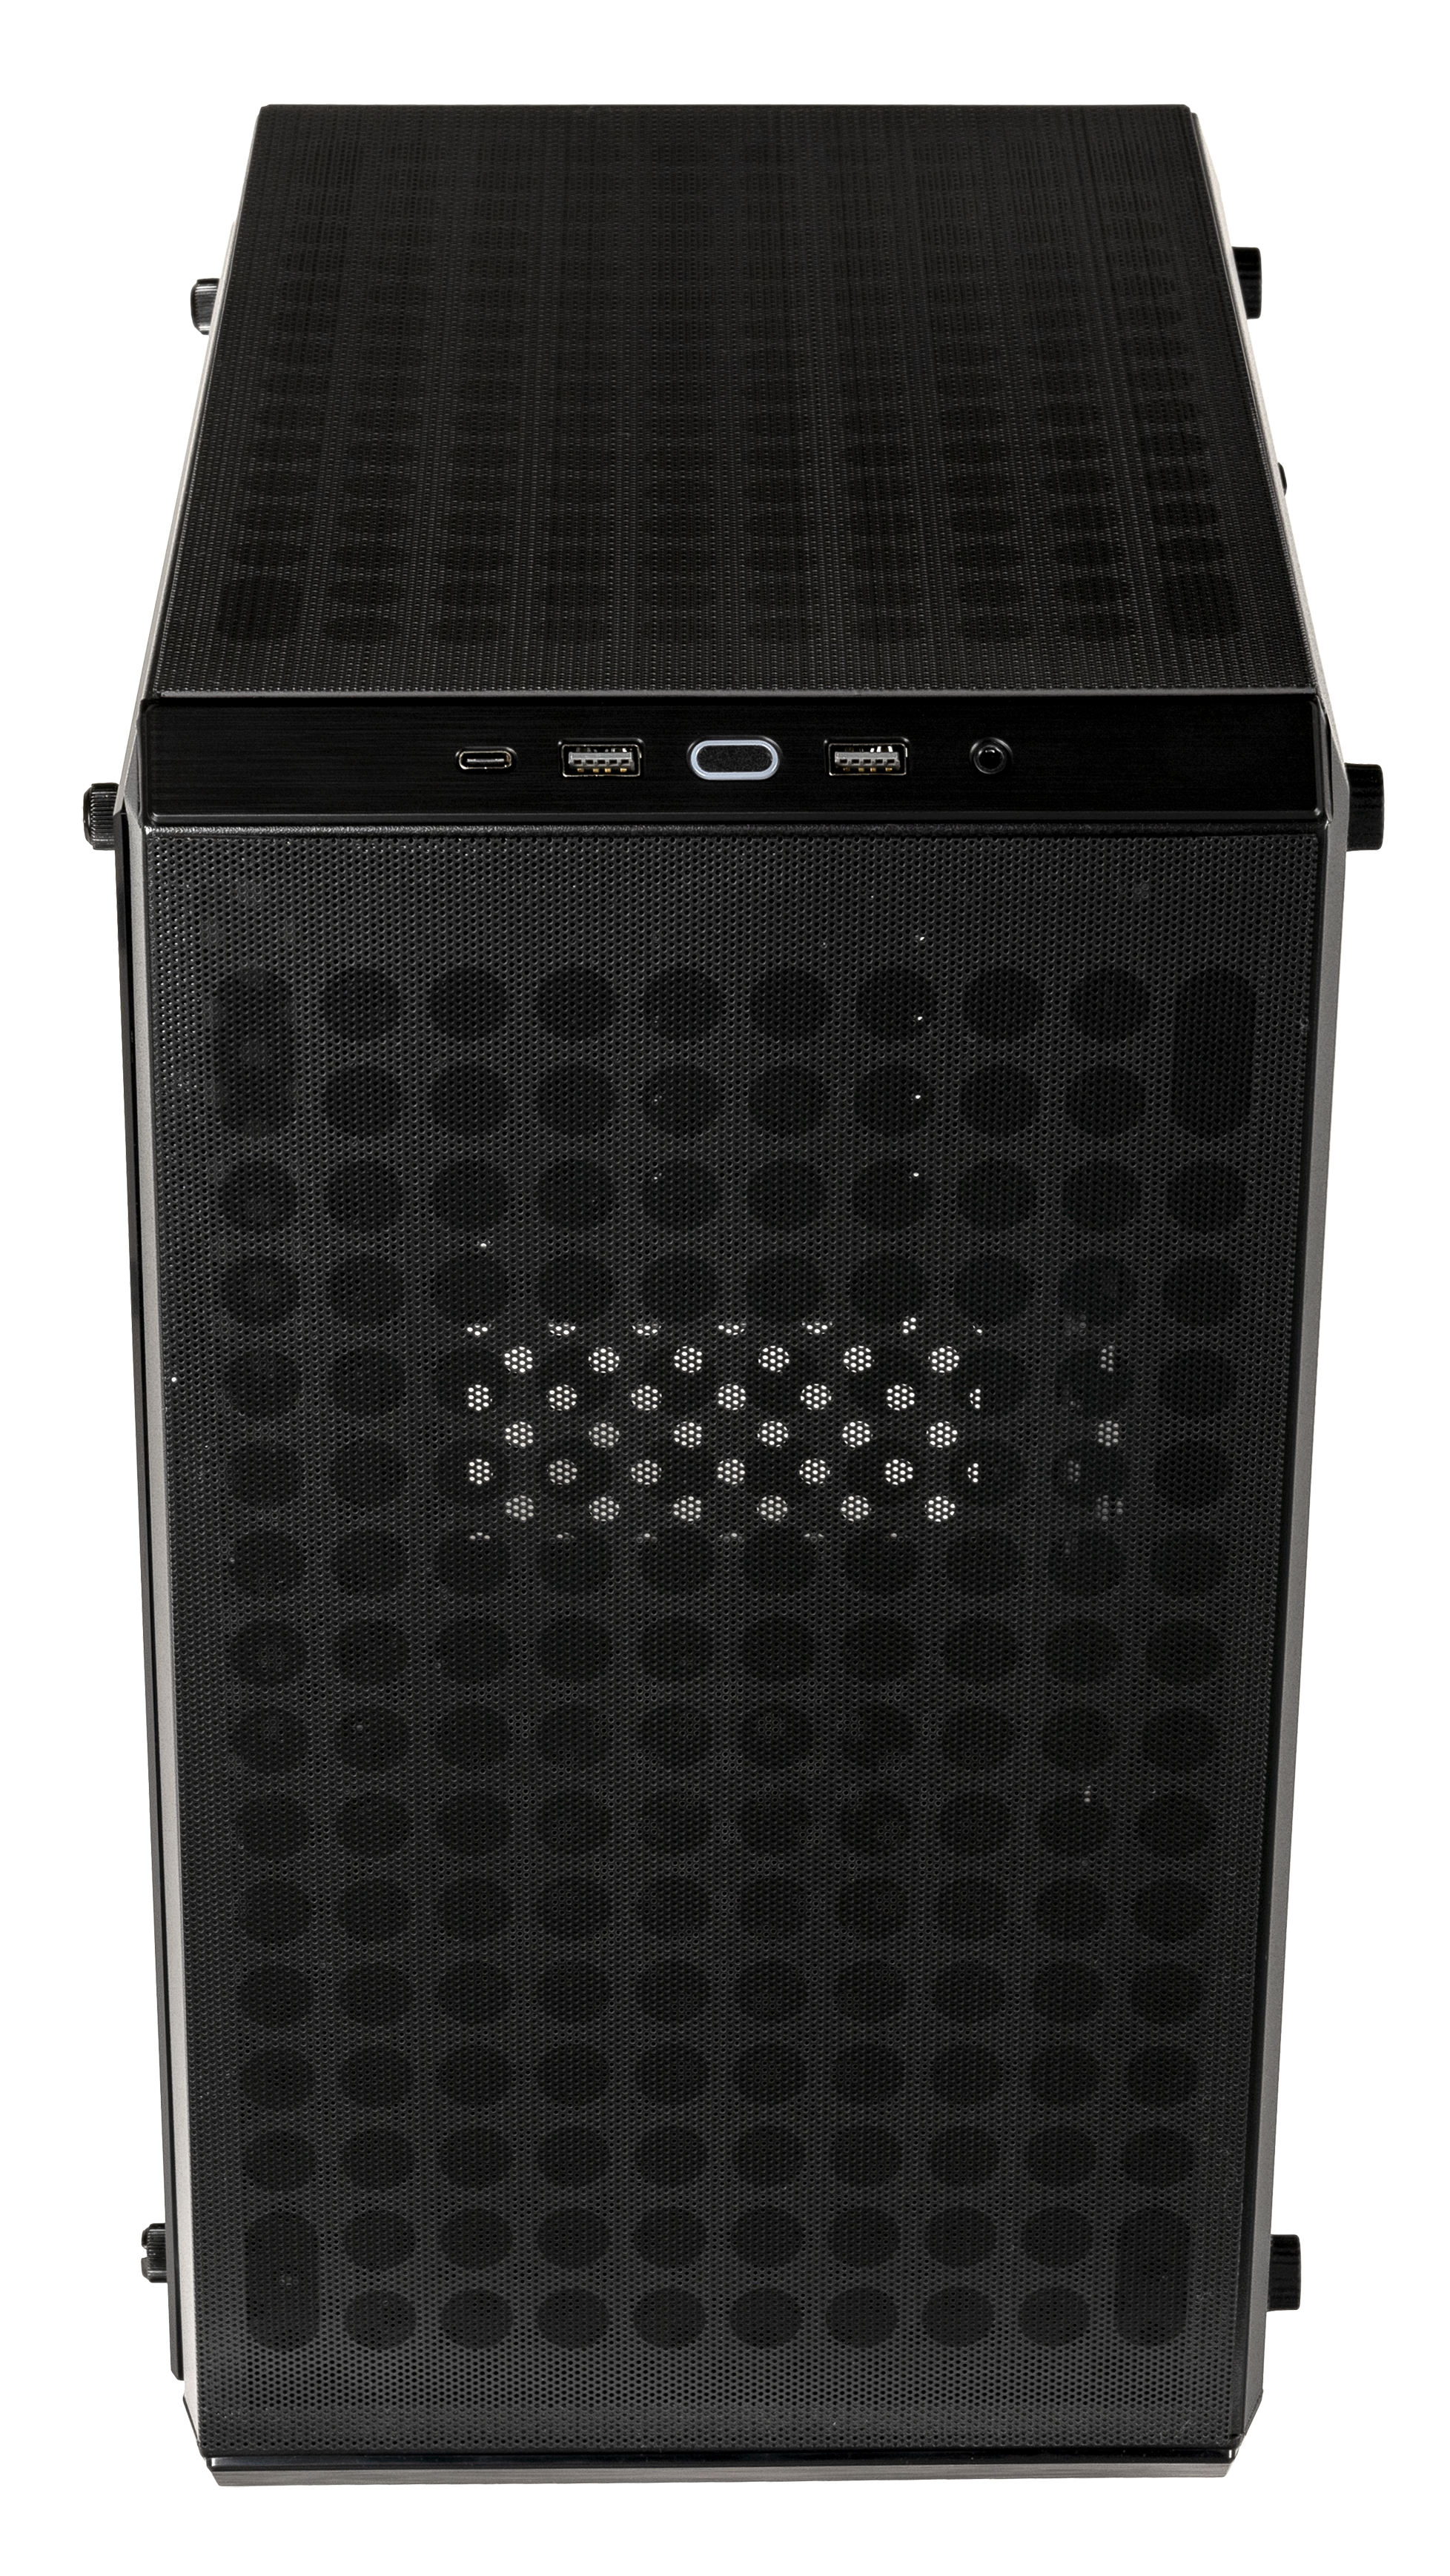 Cooler Master - Cooler Master Q300L V2 Micro-ATX Case - Black